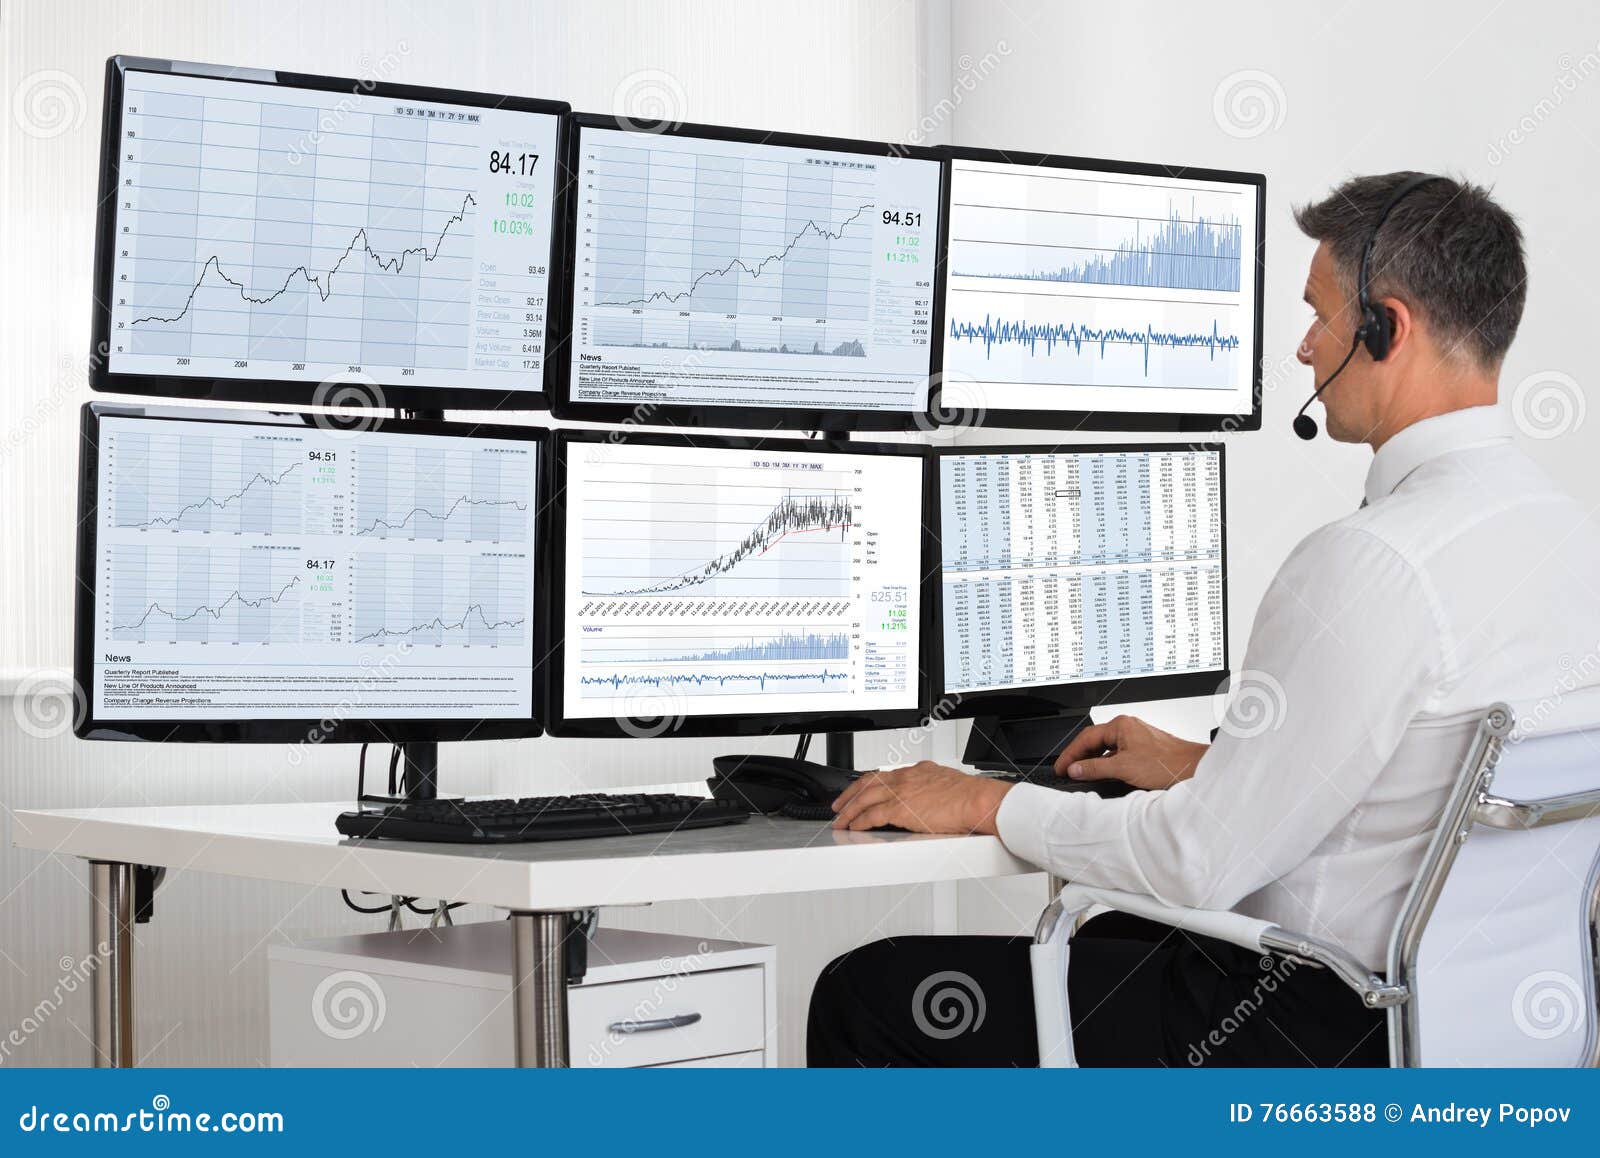 stock market broker looking at graphs on multiple screens